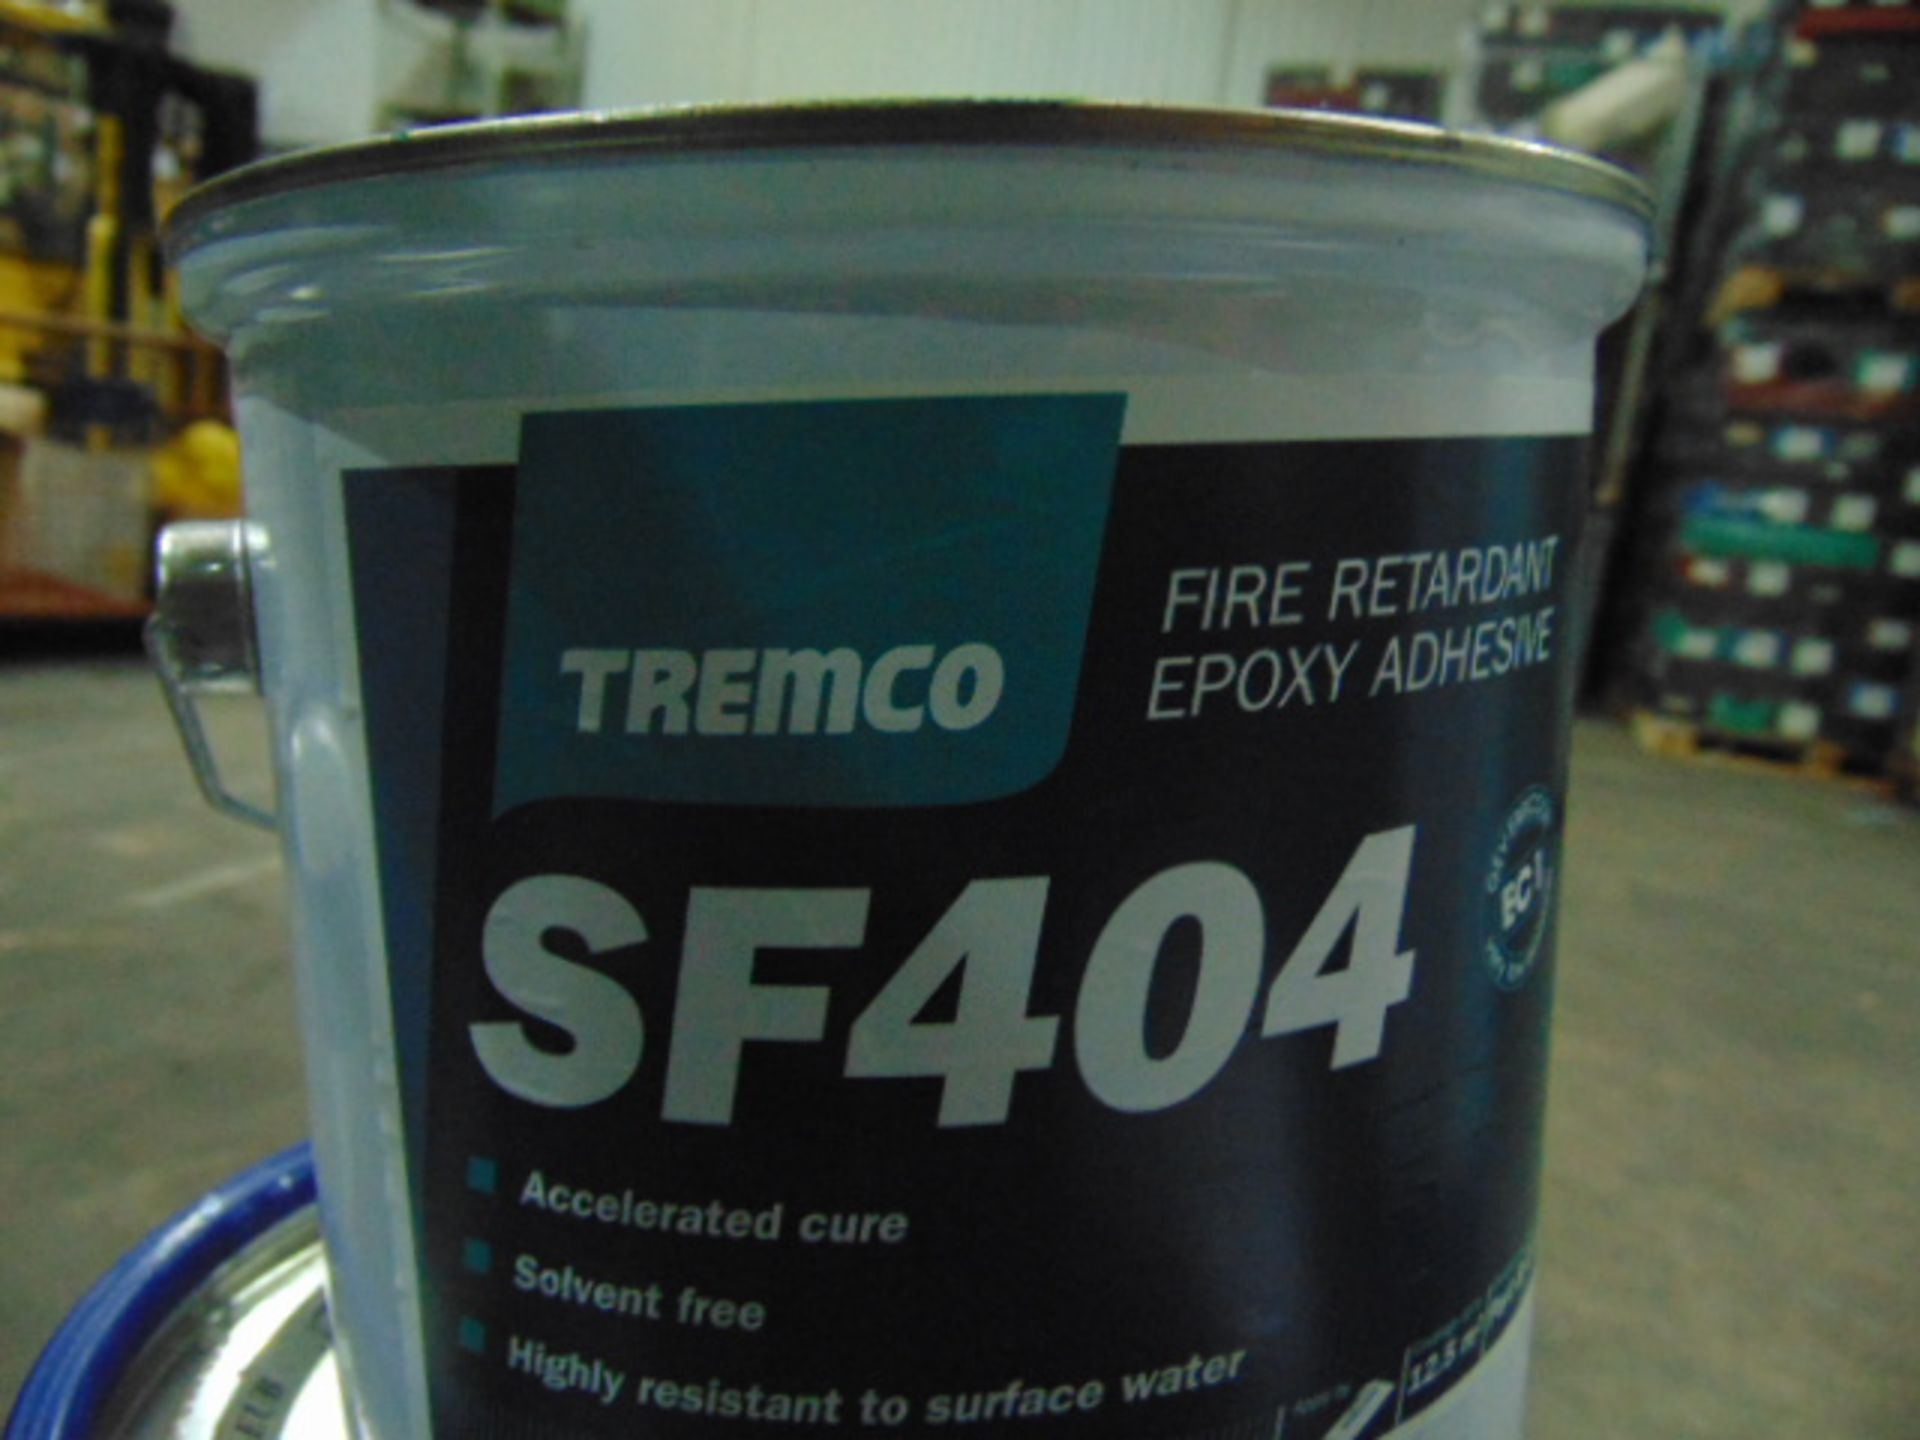 29 x Boxes of Tremco SF404 Fire Retardant Epoxy - Image 5 of 5